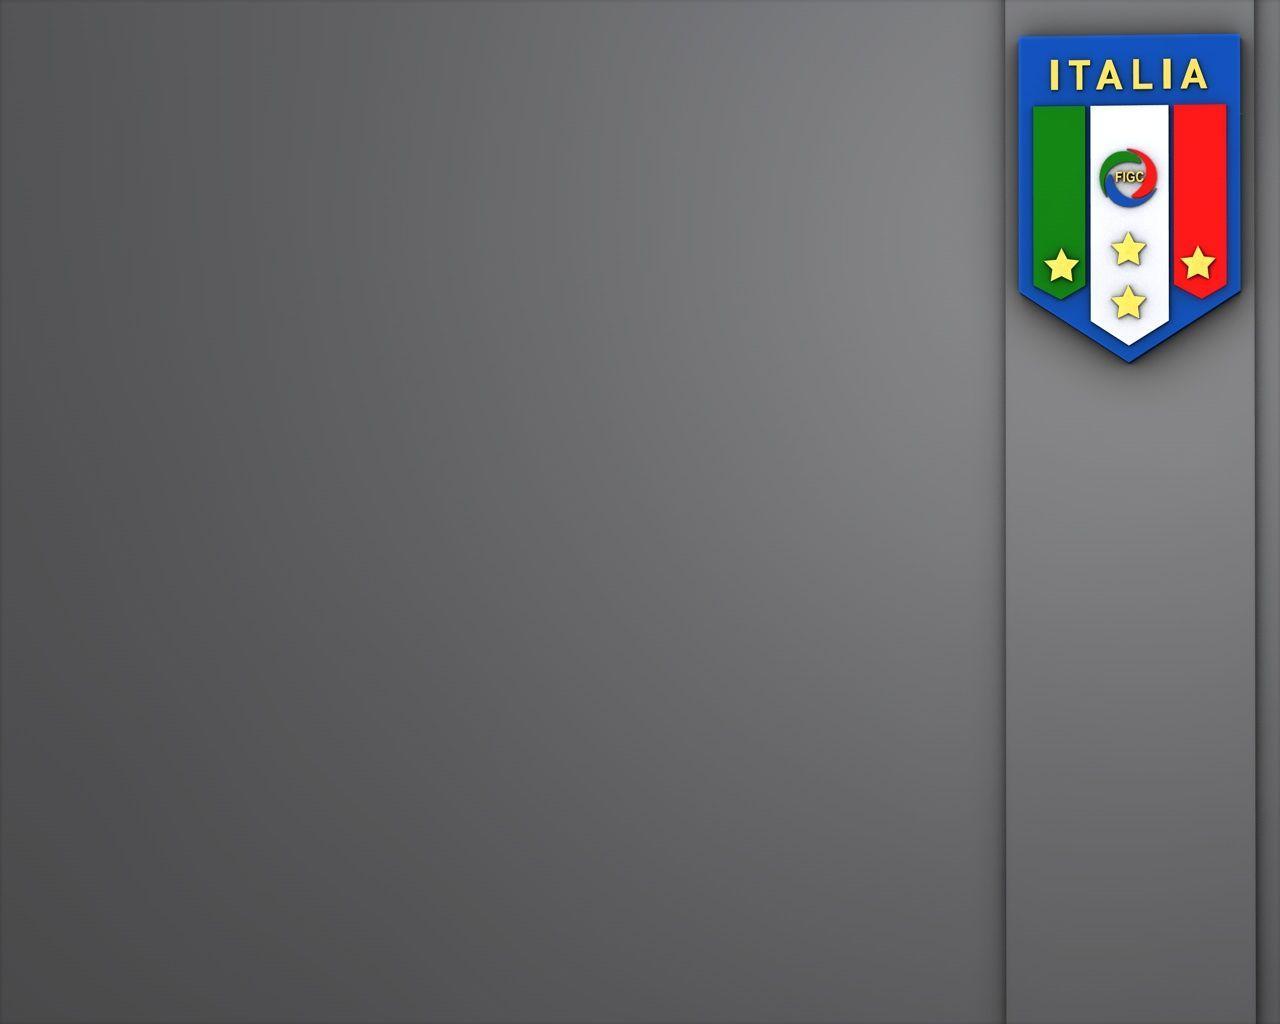 Italia desktop PC and Mac wallpaper